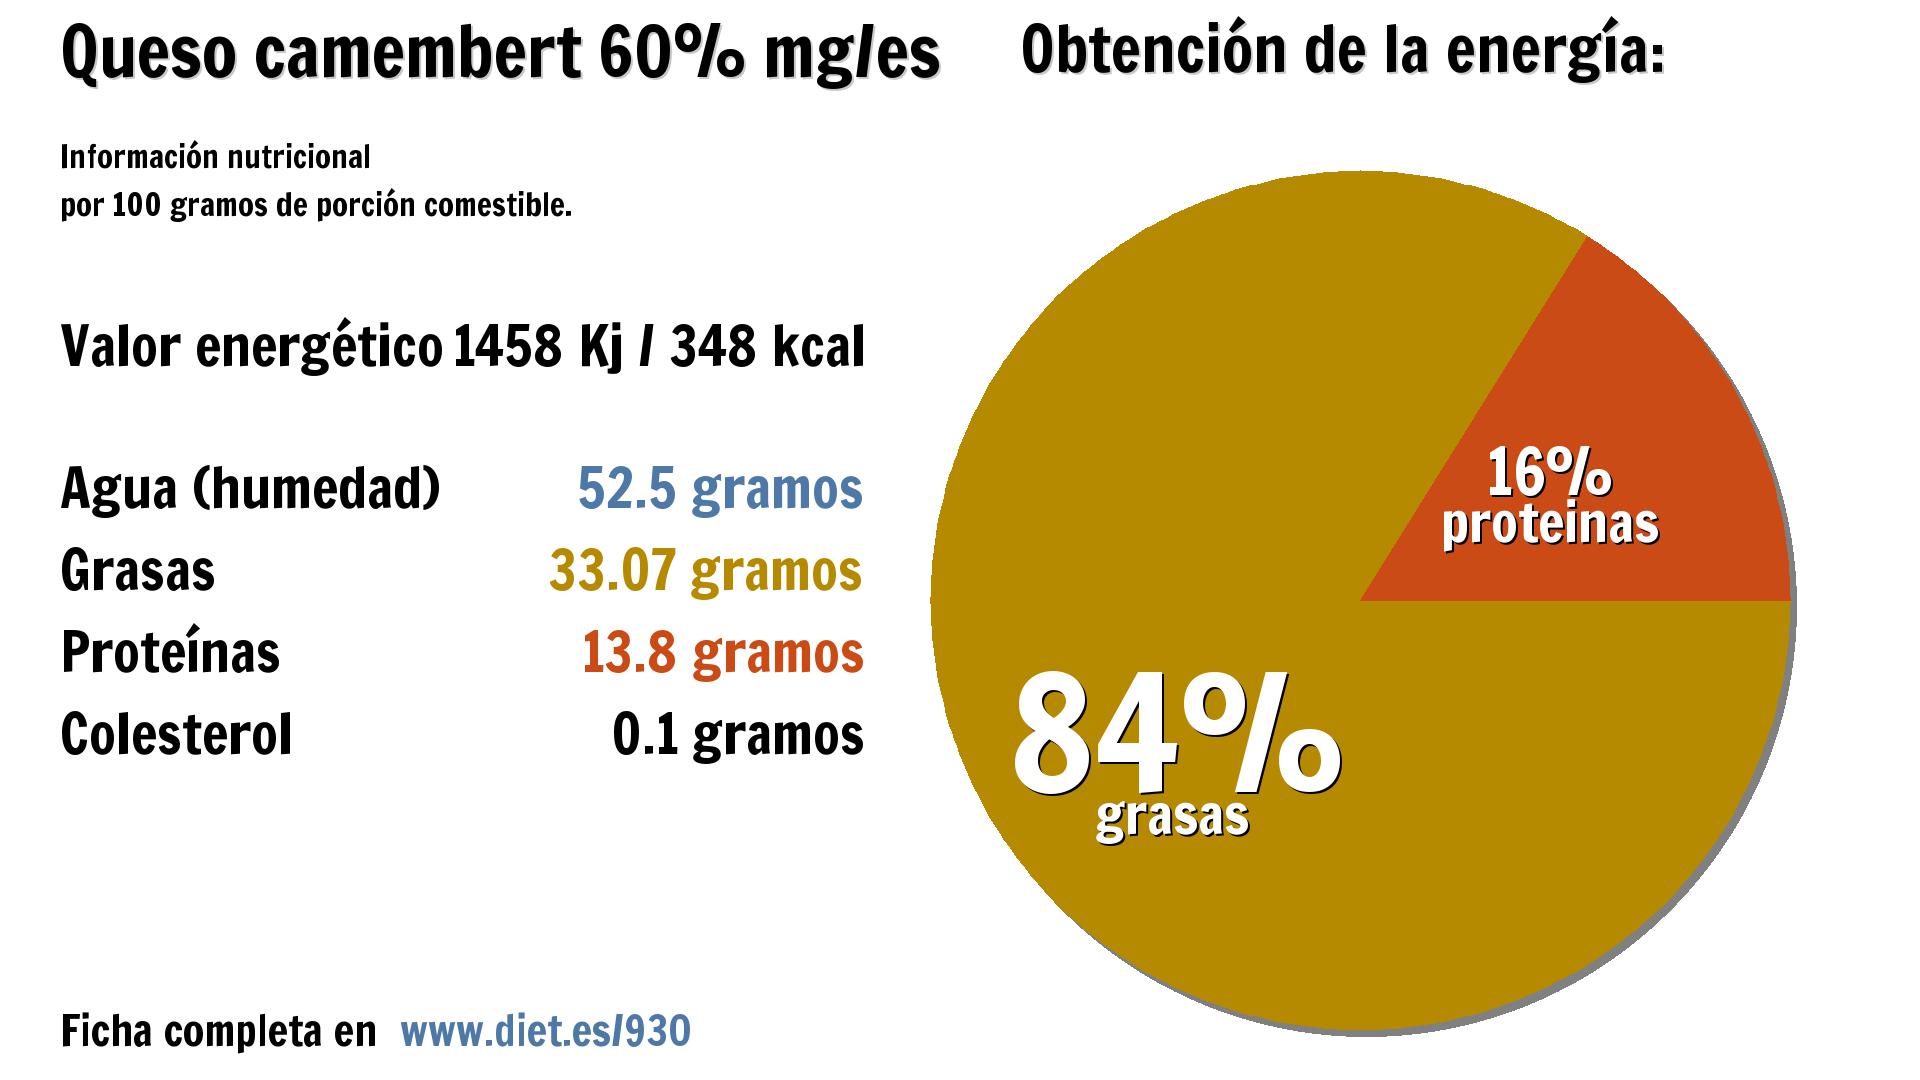 Queso camembert 60% mg/es: energía 1458 Kj, agua 53 g., grasas 33 g. y proteínas 14 g.